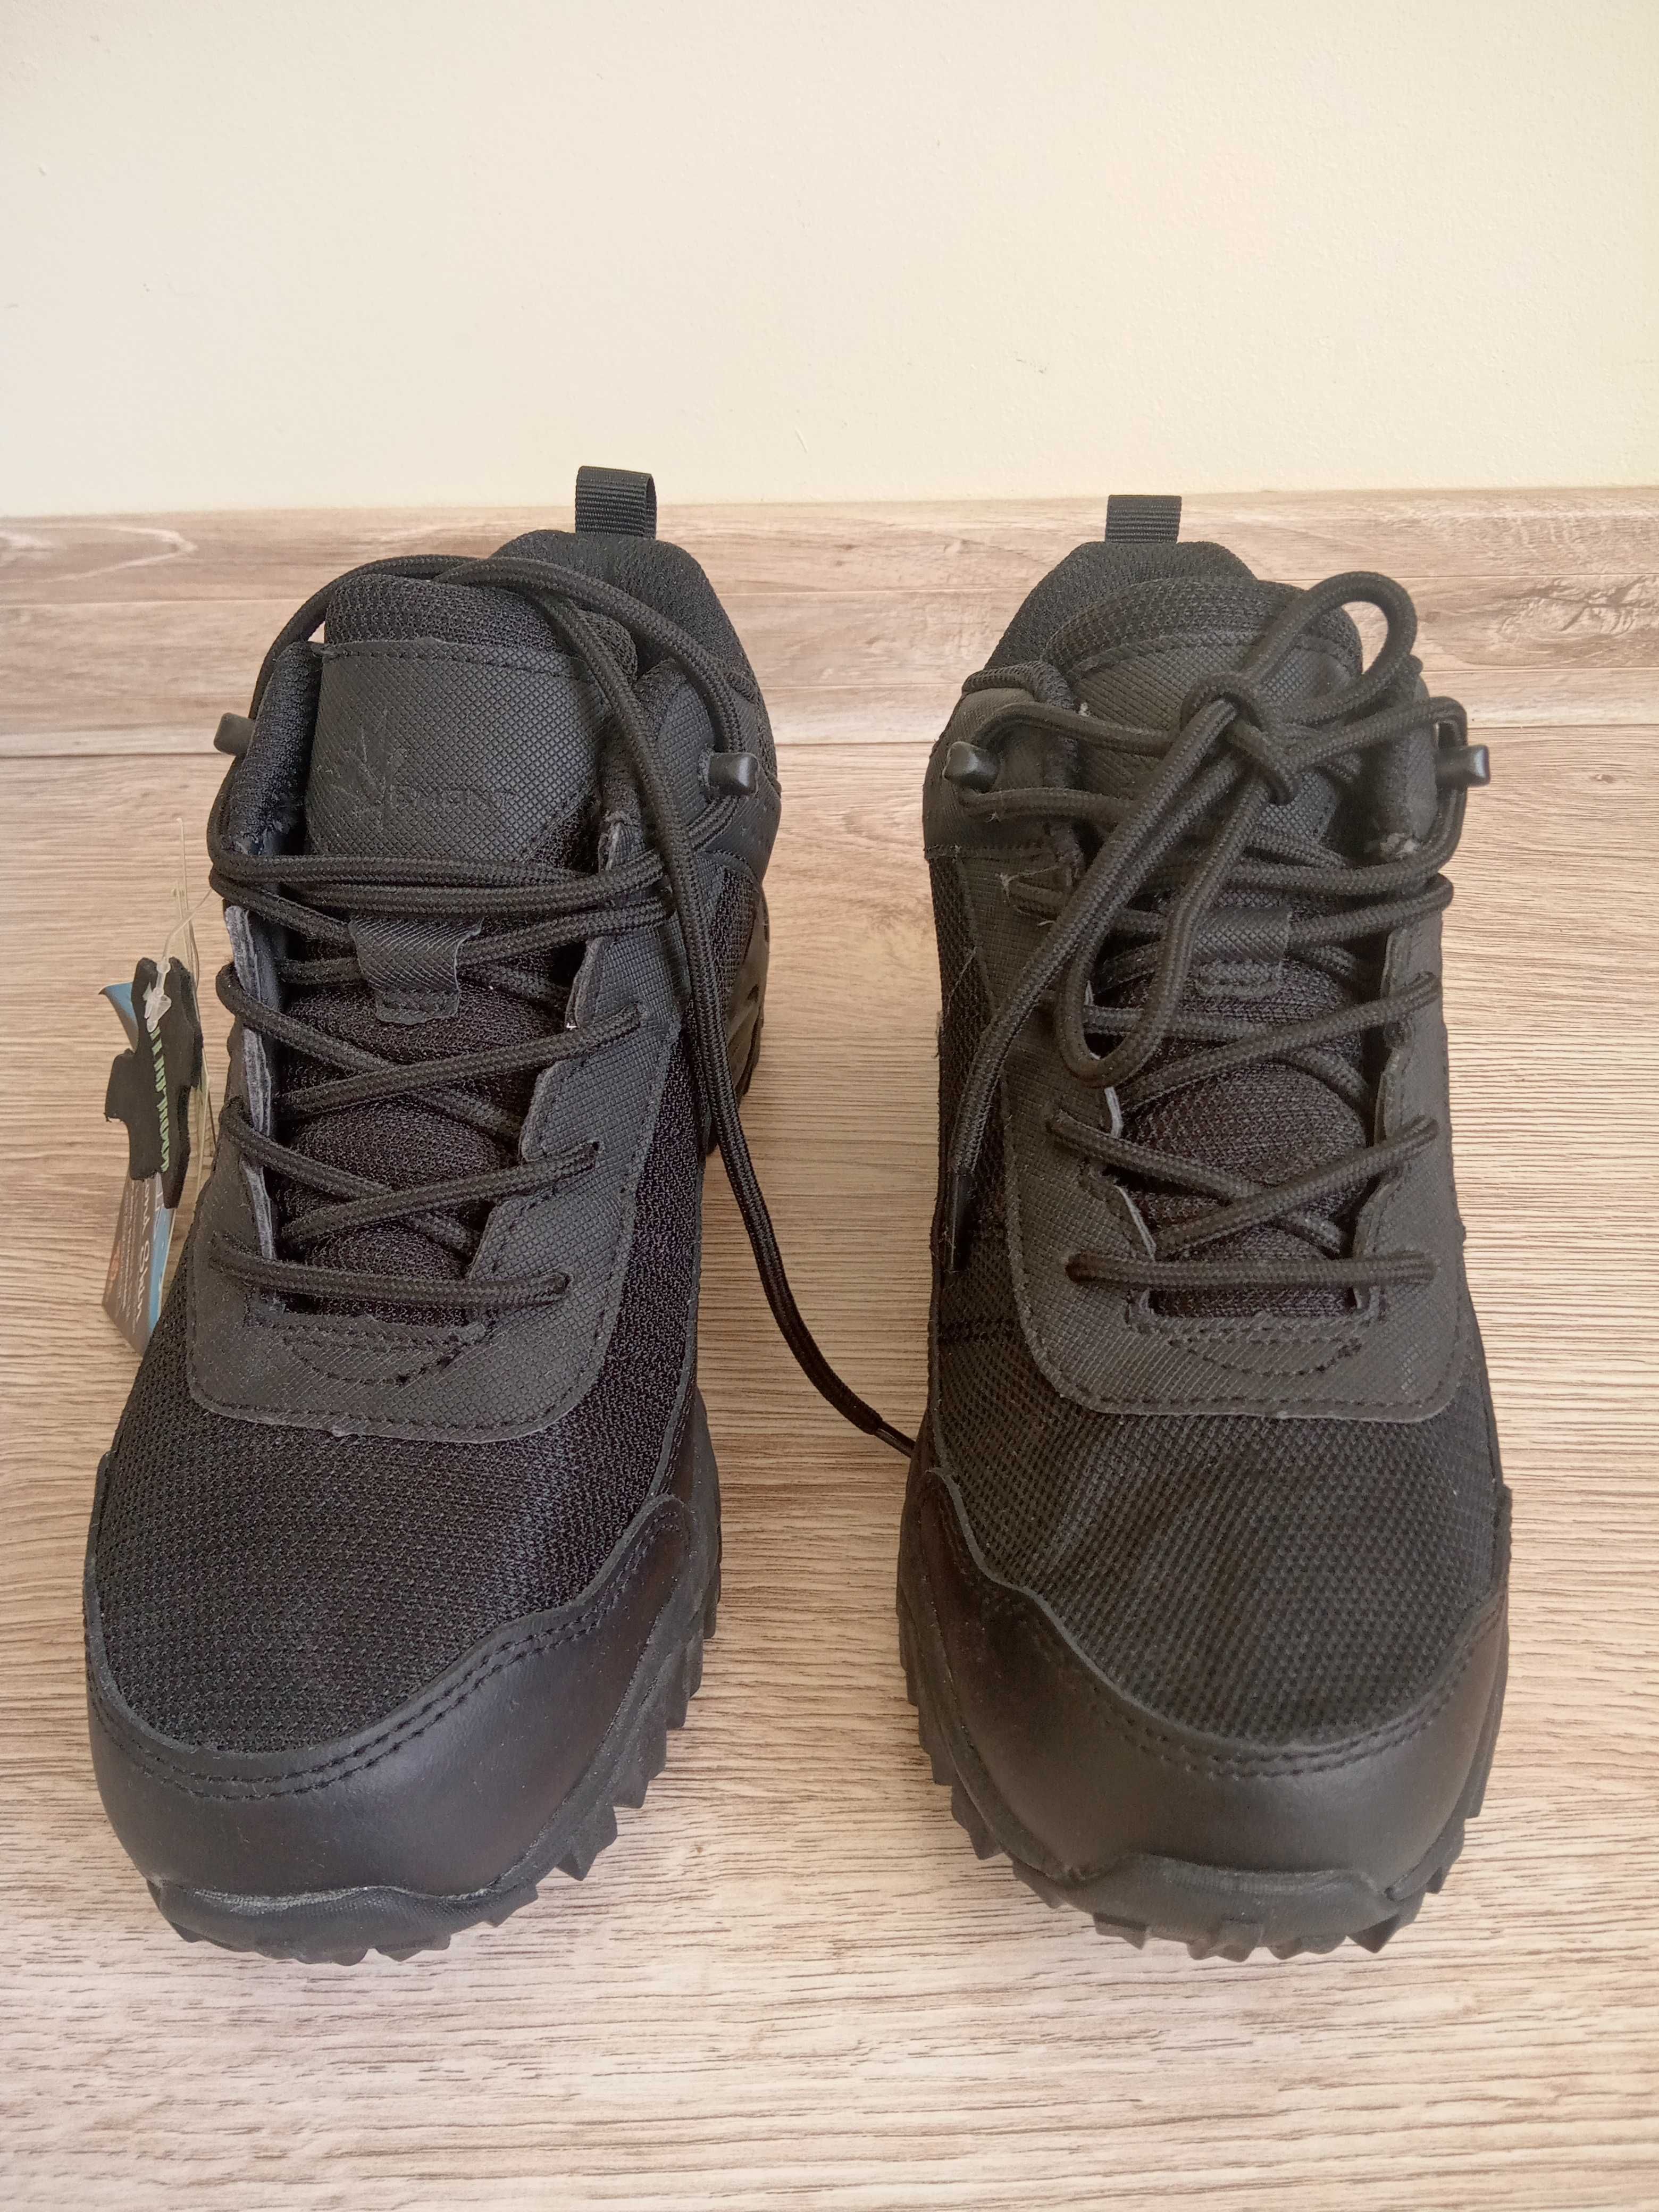 Nowe buty trekkingowe Vemont wodoodporne skóra rozm. 39